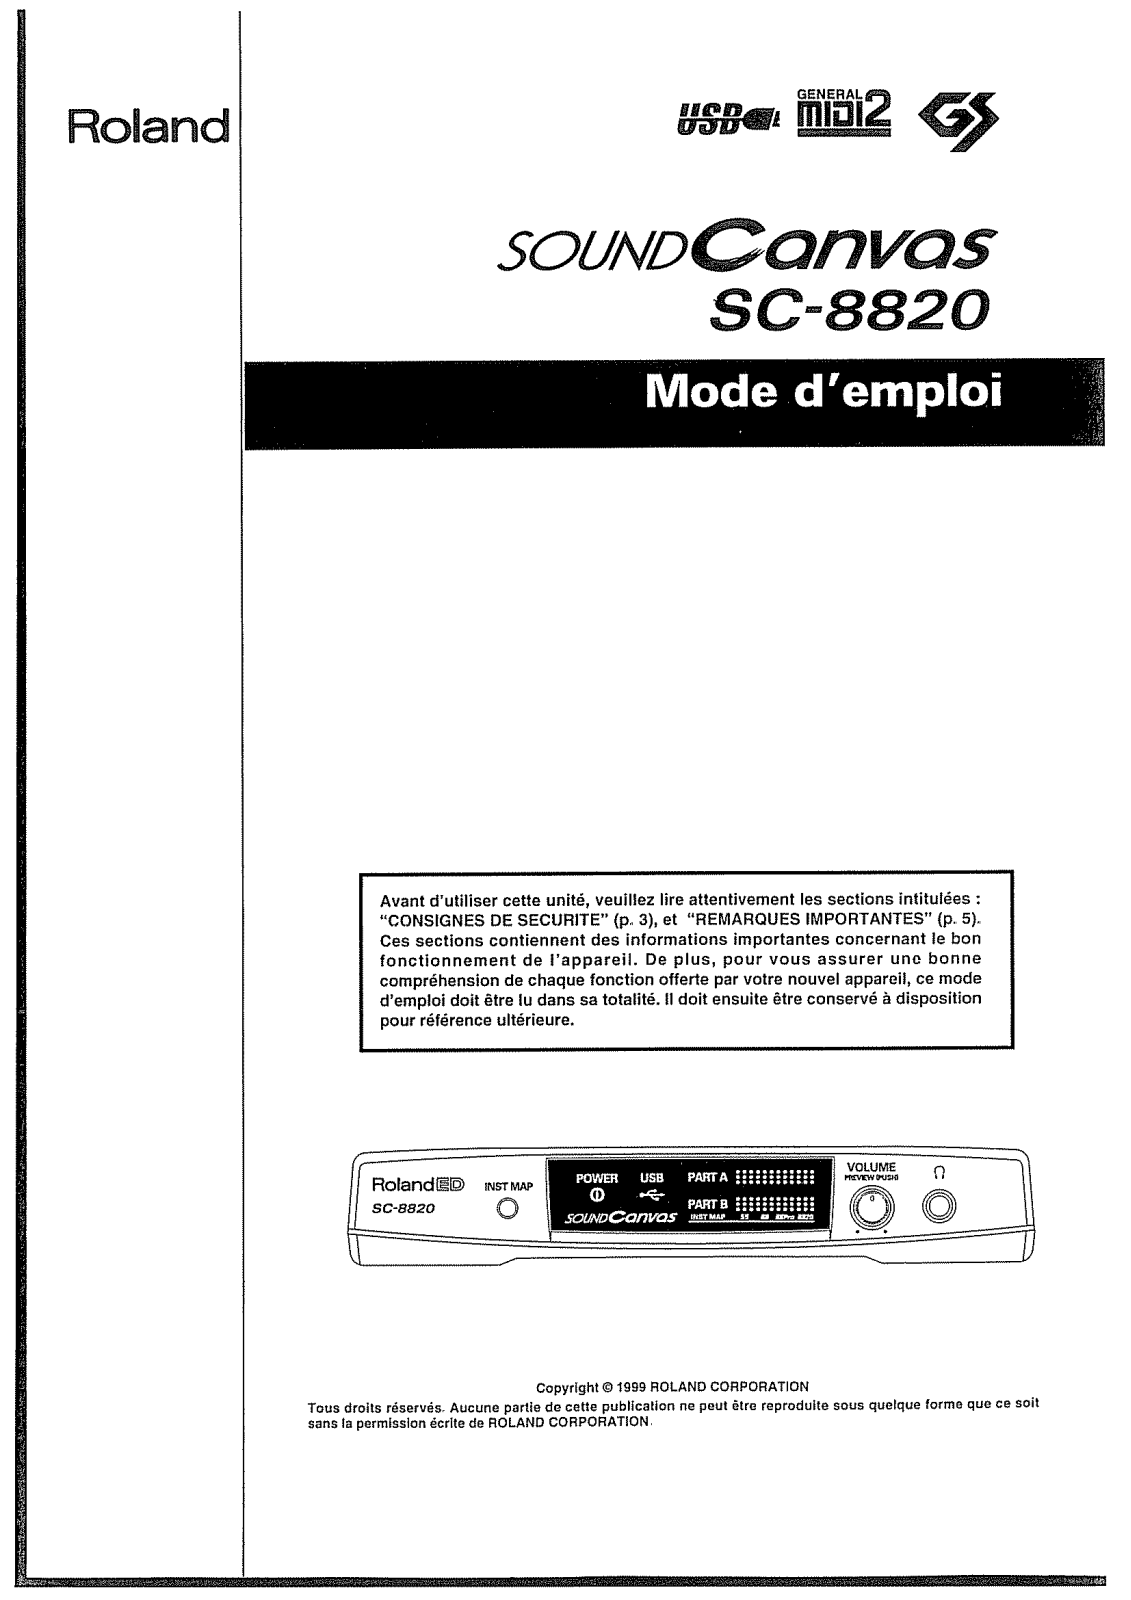 ROLAND SC-8820 User Manual